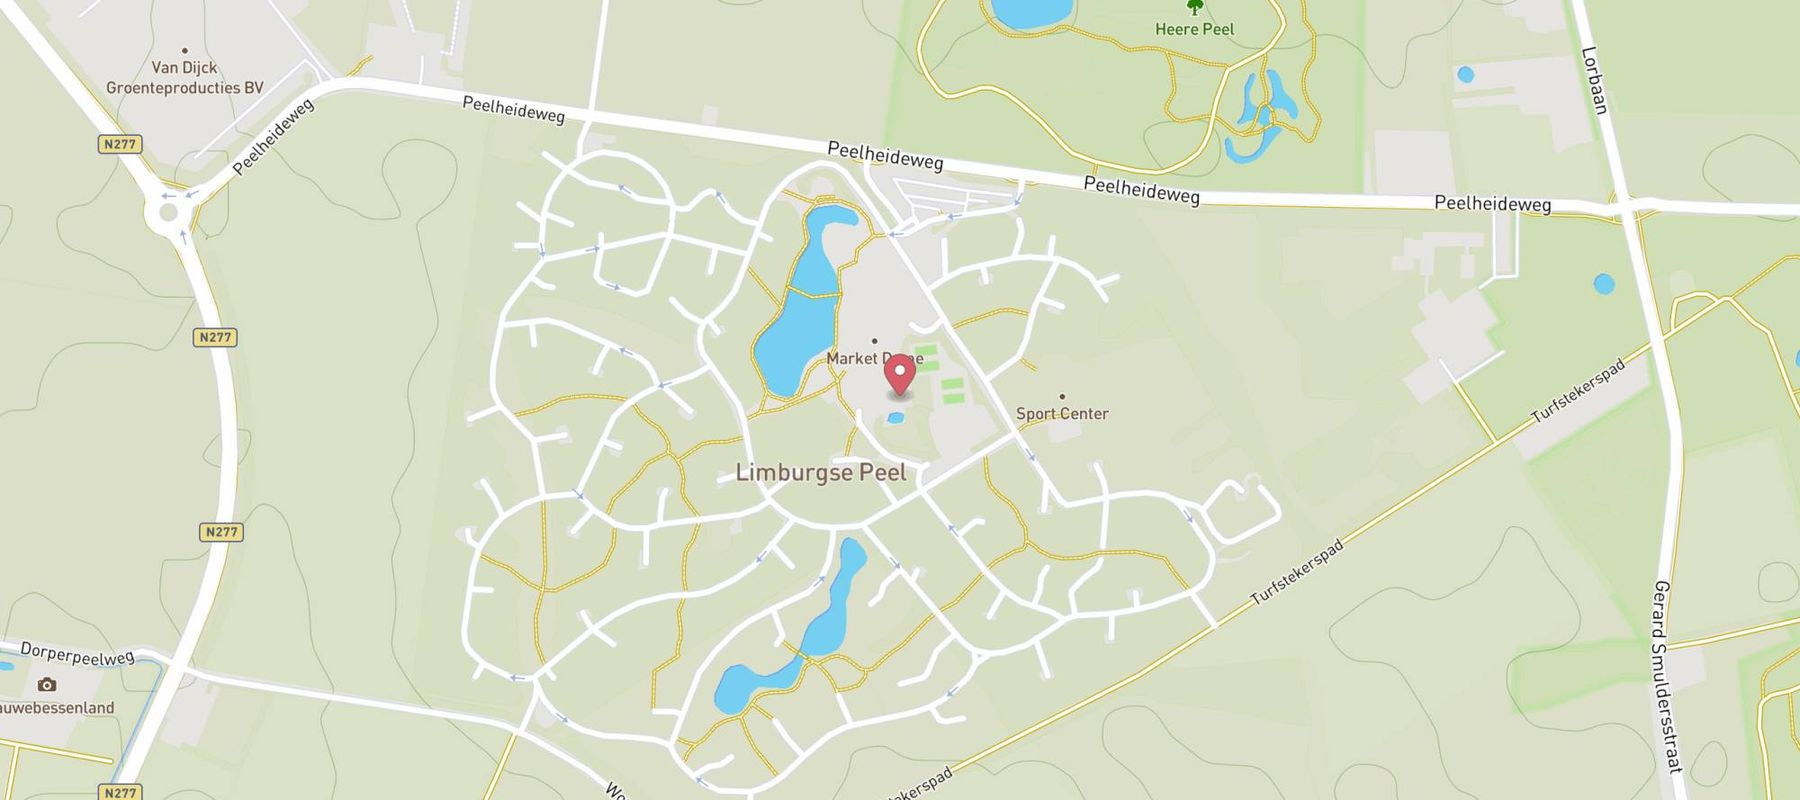 Center Parcs Limburgse Peel map